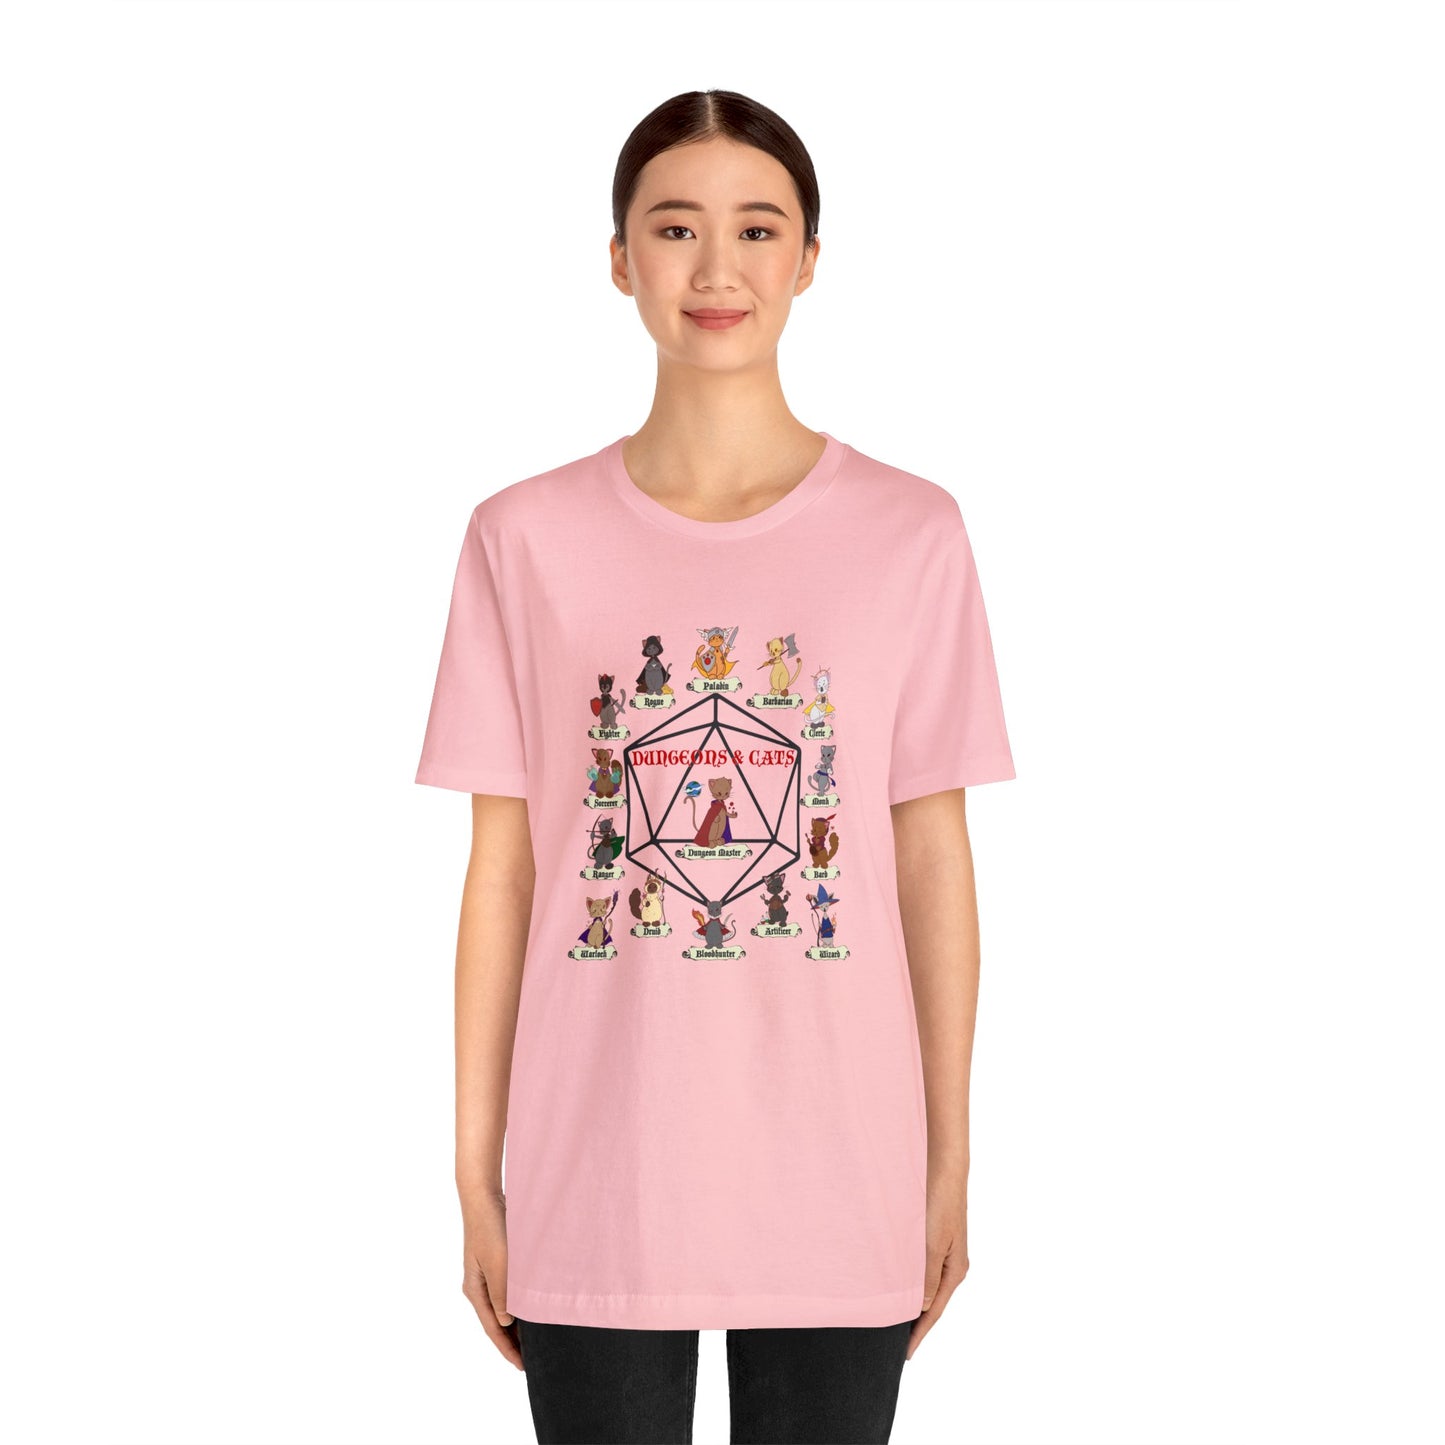 Dungeons & Cats - Bella & Canvas Unisex Jersey Short Sleeve Tee